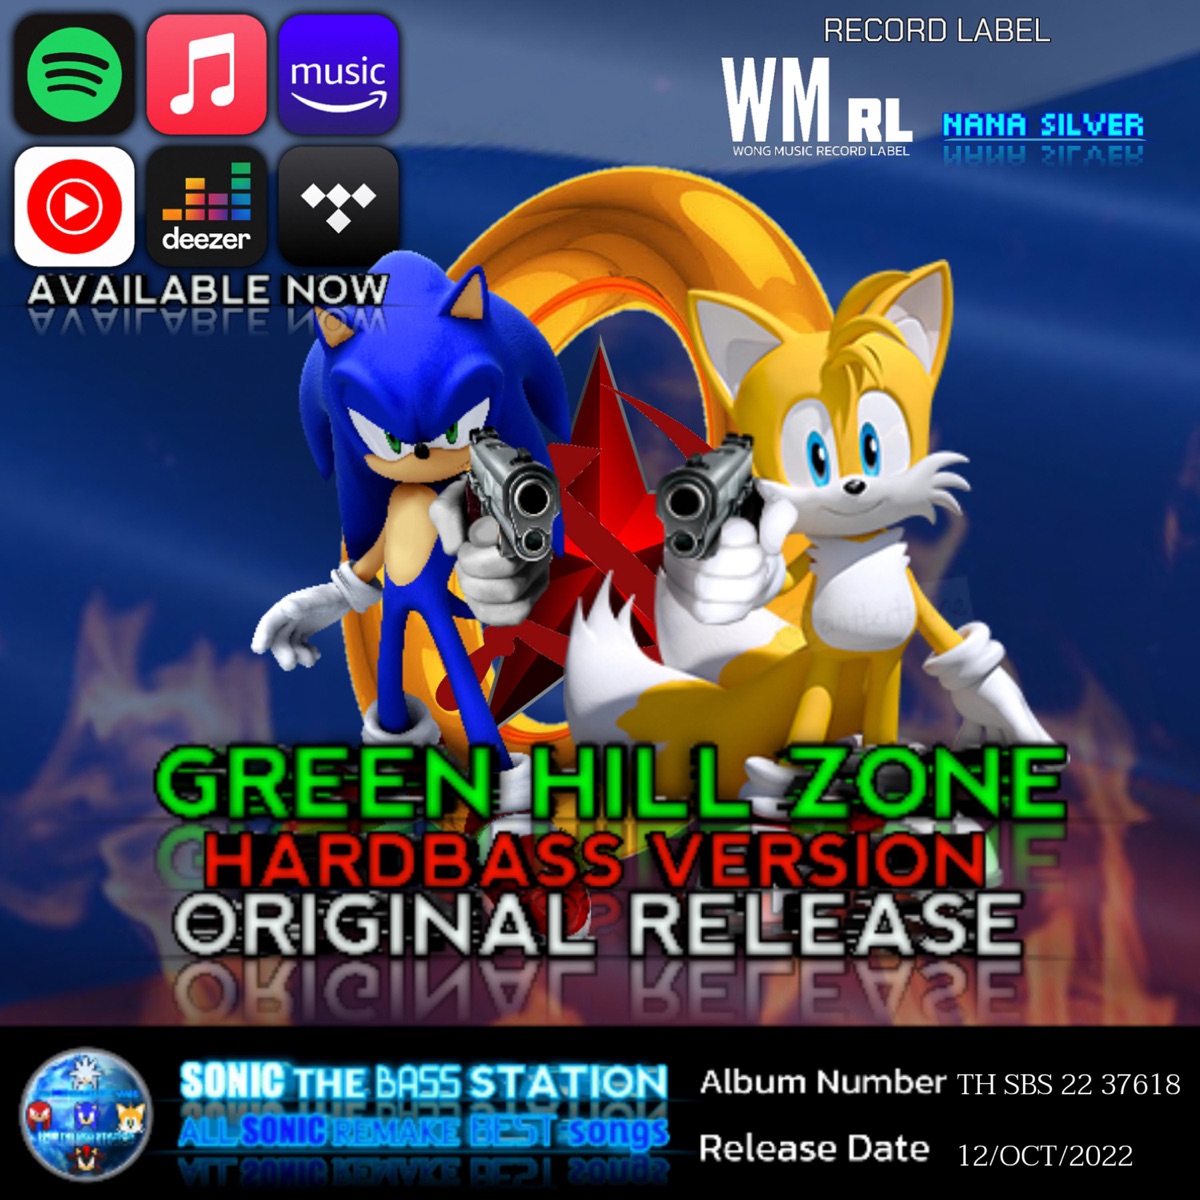 Walk (Originals World of Sonic.EXE Soundtrack) - Single - Album by Create  Music Produtions - Apple Music